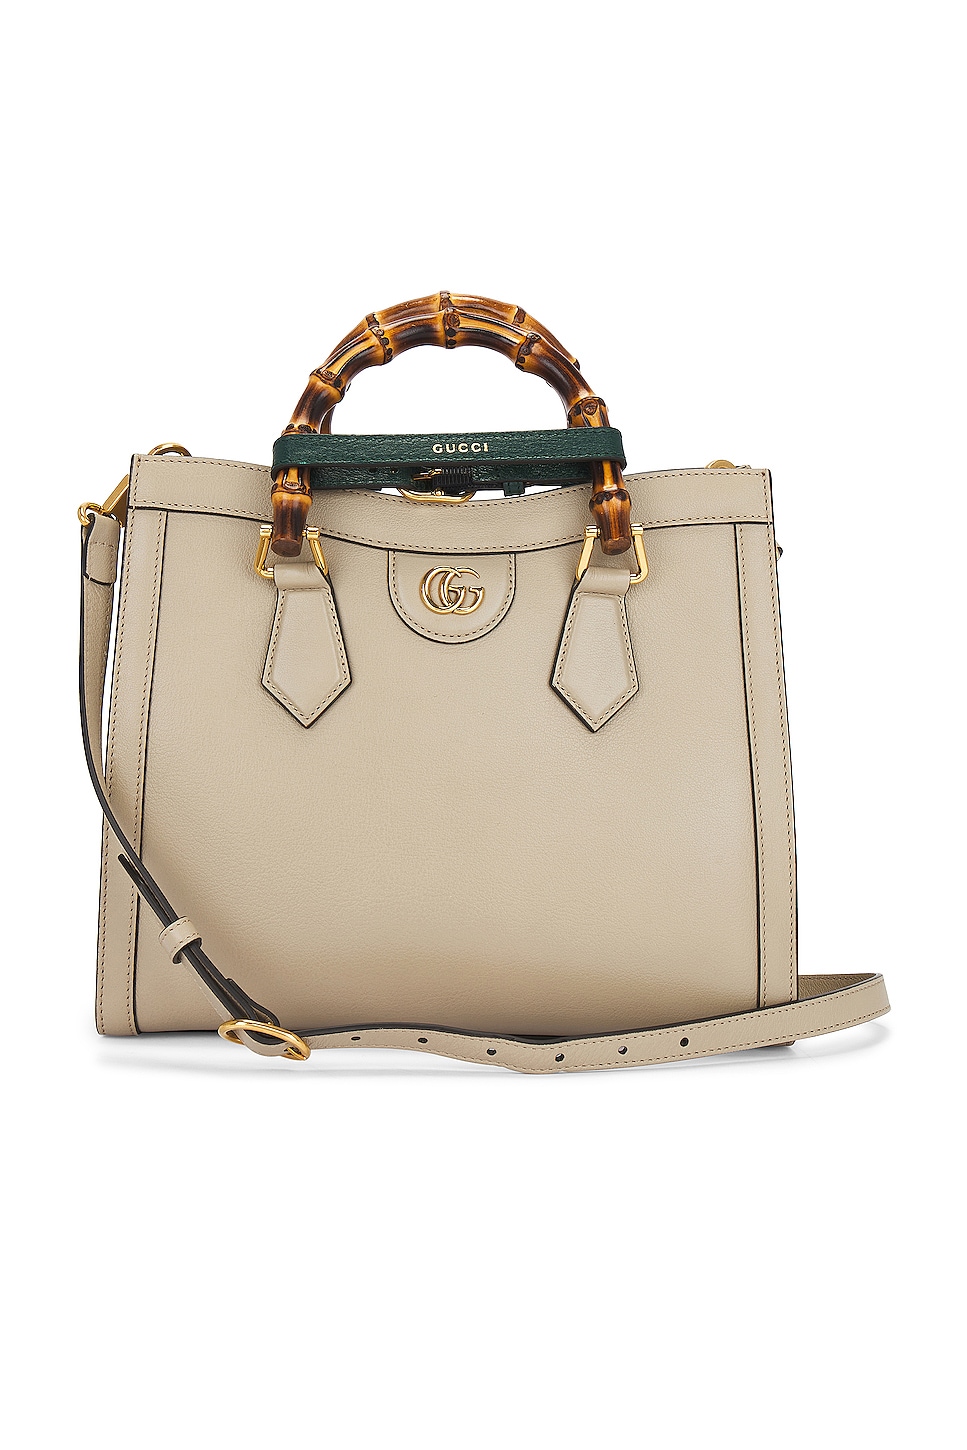 FWRD Renew Gucci Diana 2 Way Handbag in Taupe | REVOLVE